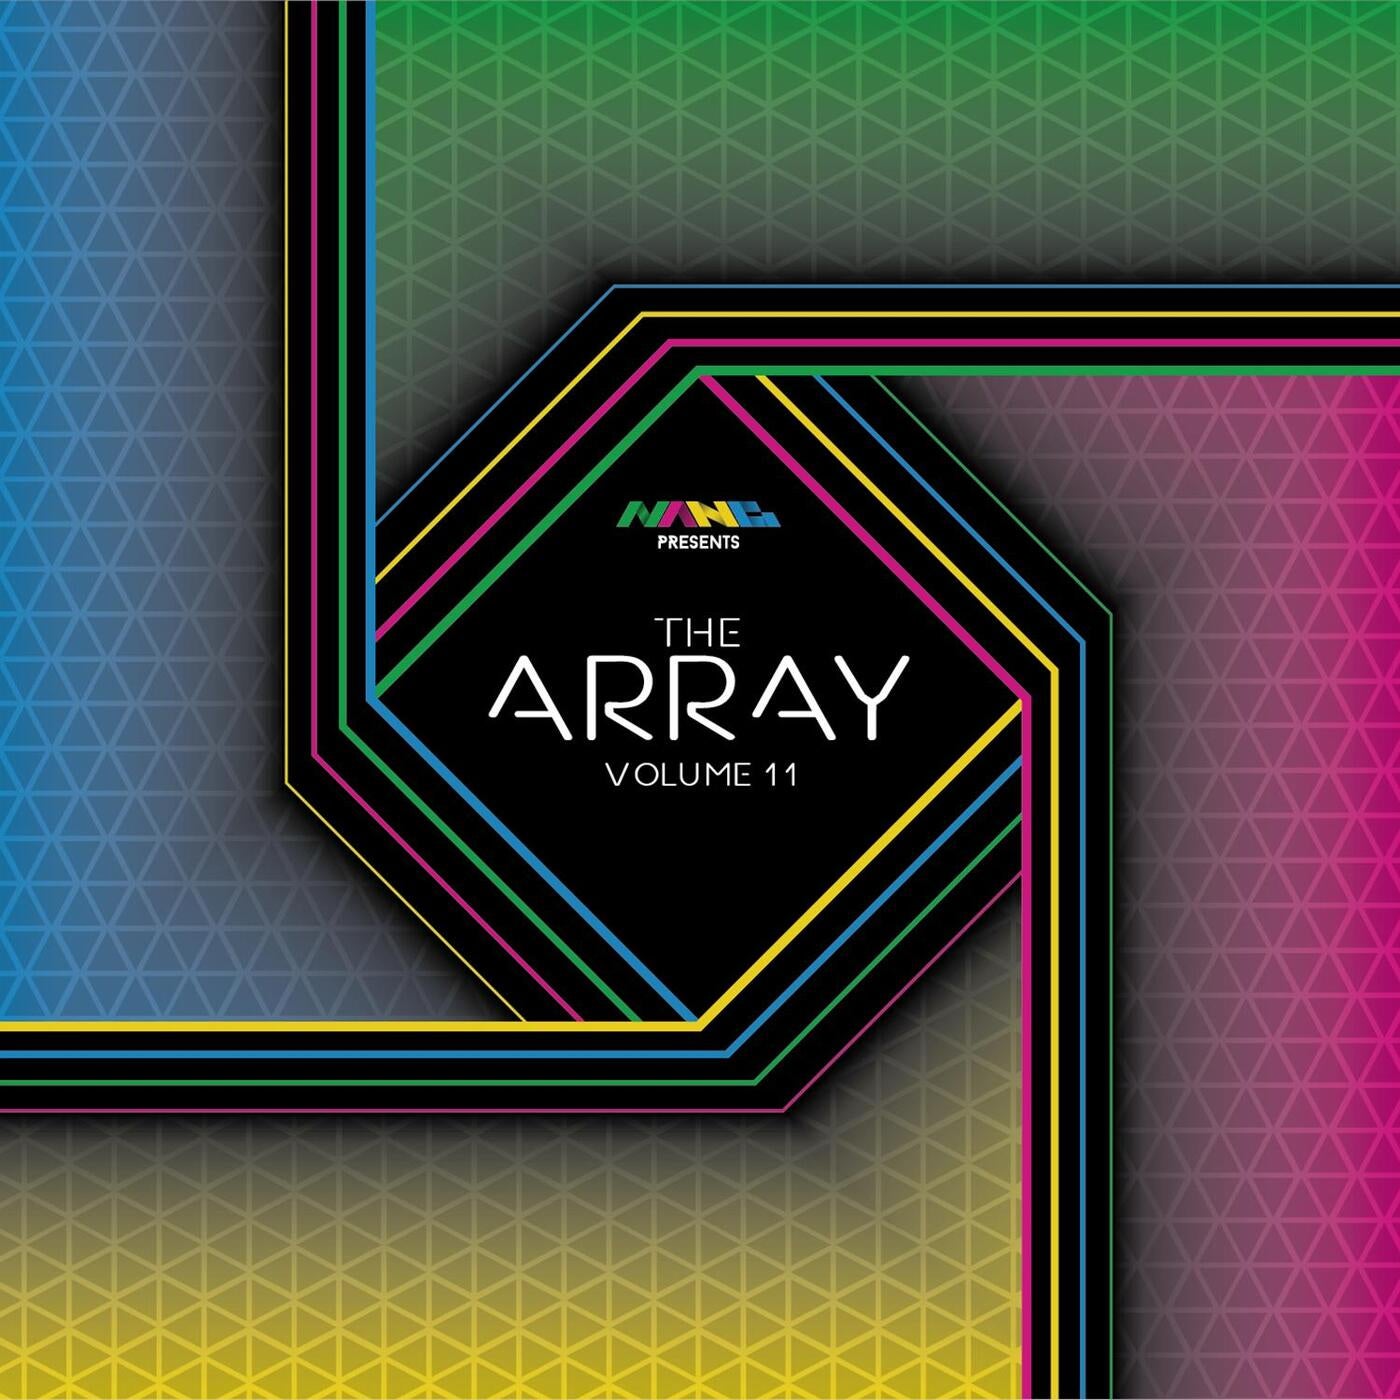 Nang Presents The Array Volume 11